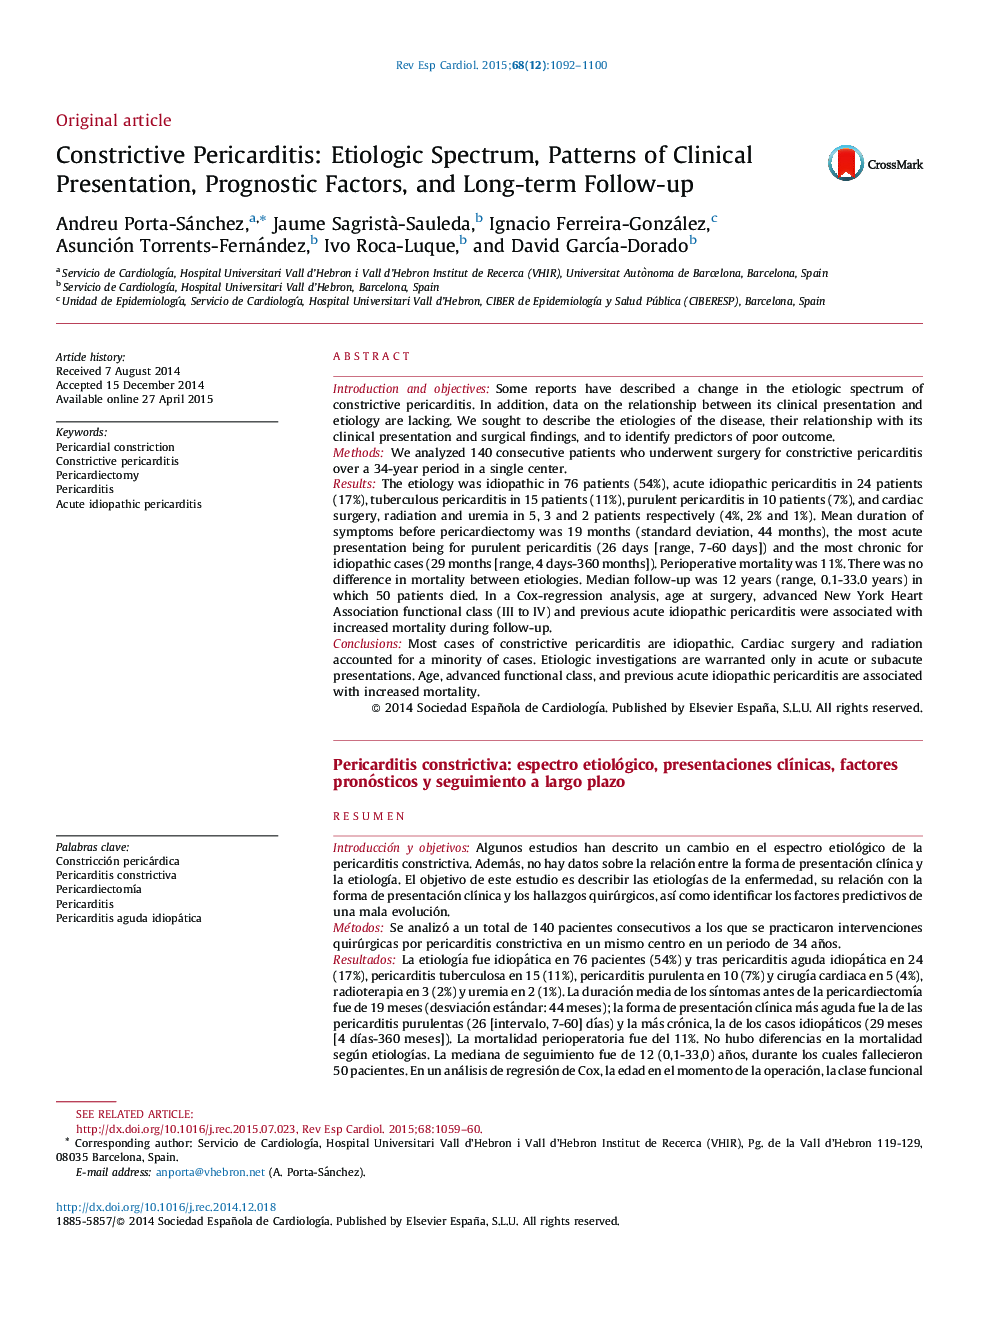 Constrictive Pericarditis: Etiologic Spectrum, Patterns of Clinical Presentation, Prognostic Factors, and Long-term Follow-up